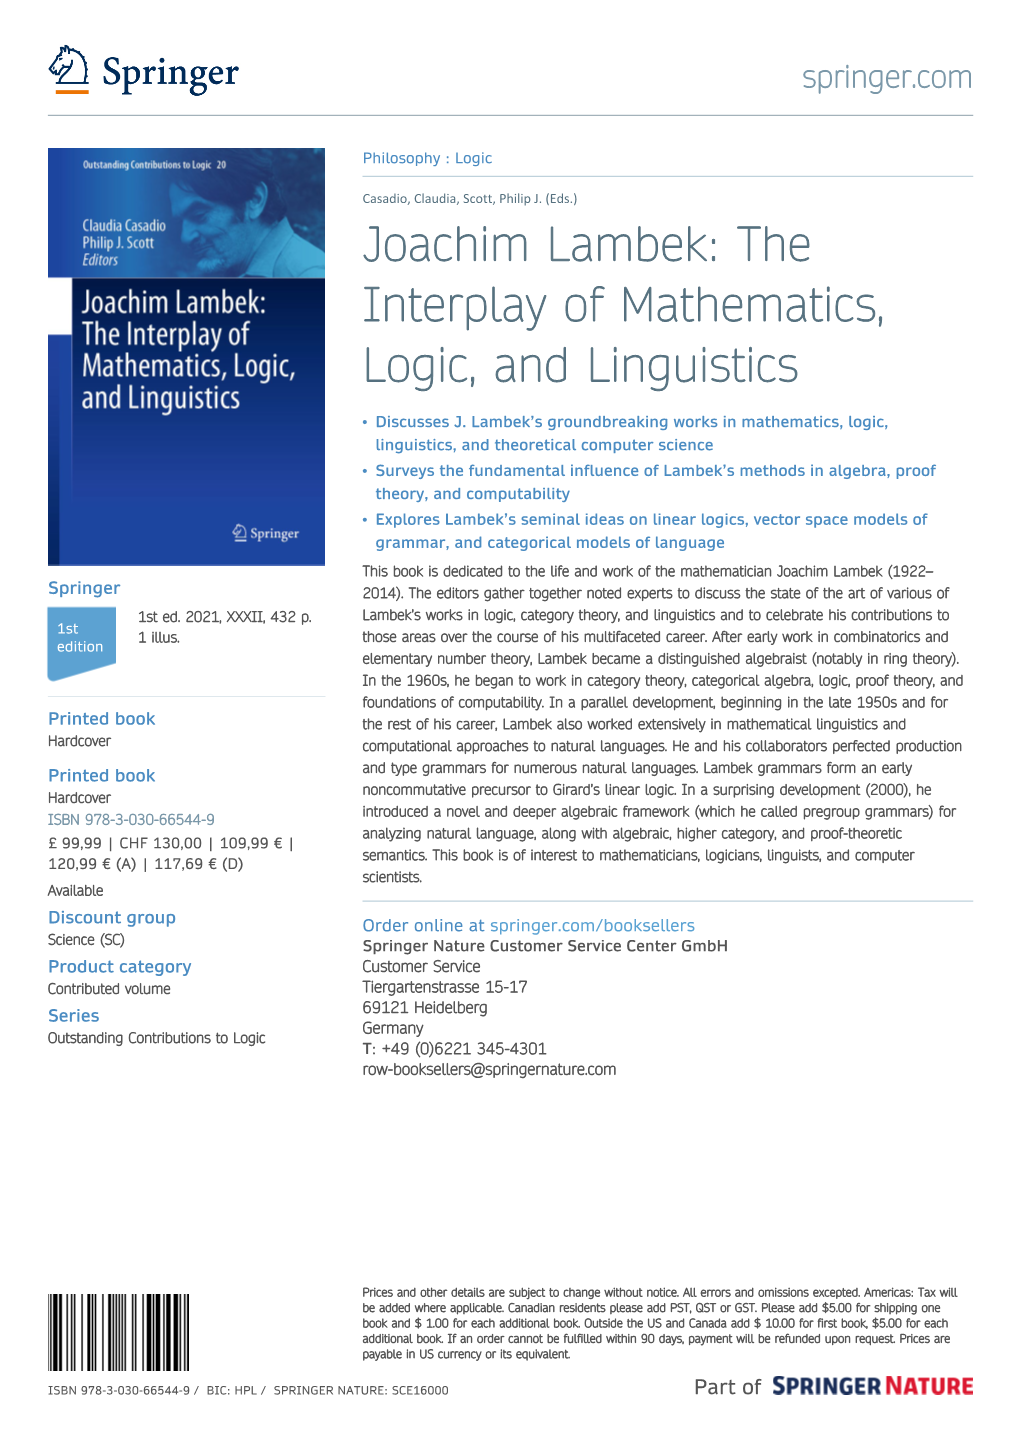 Joachim Lambek: the Interplay of Mathematics, Logic, and Linguistics